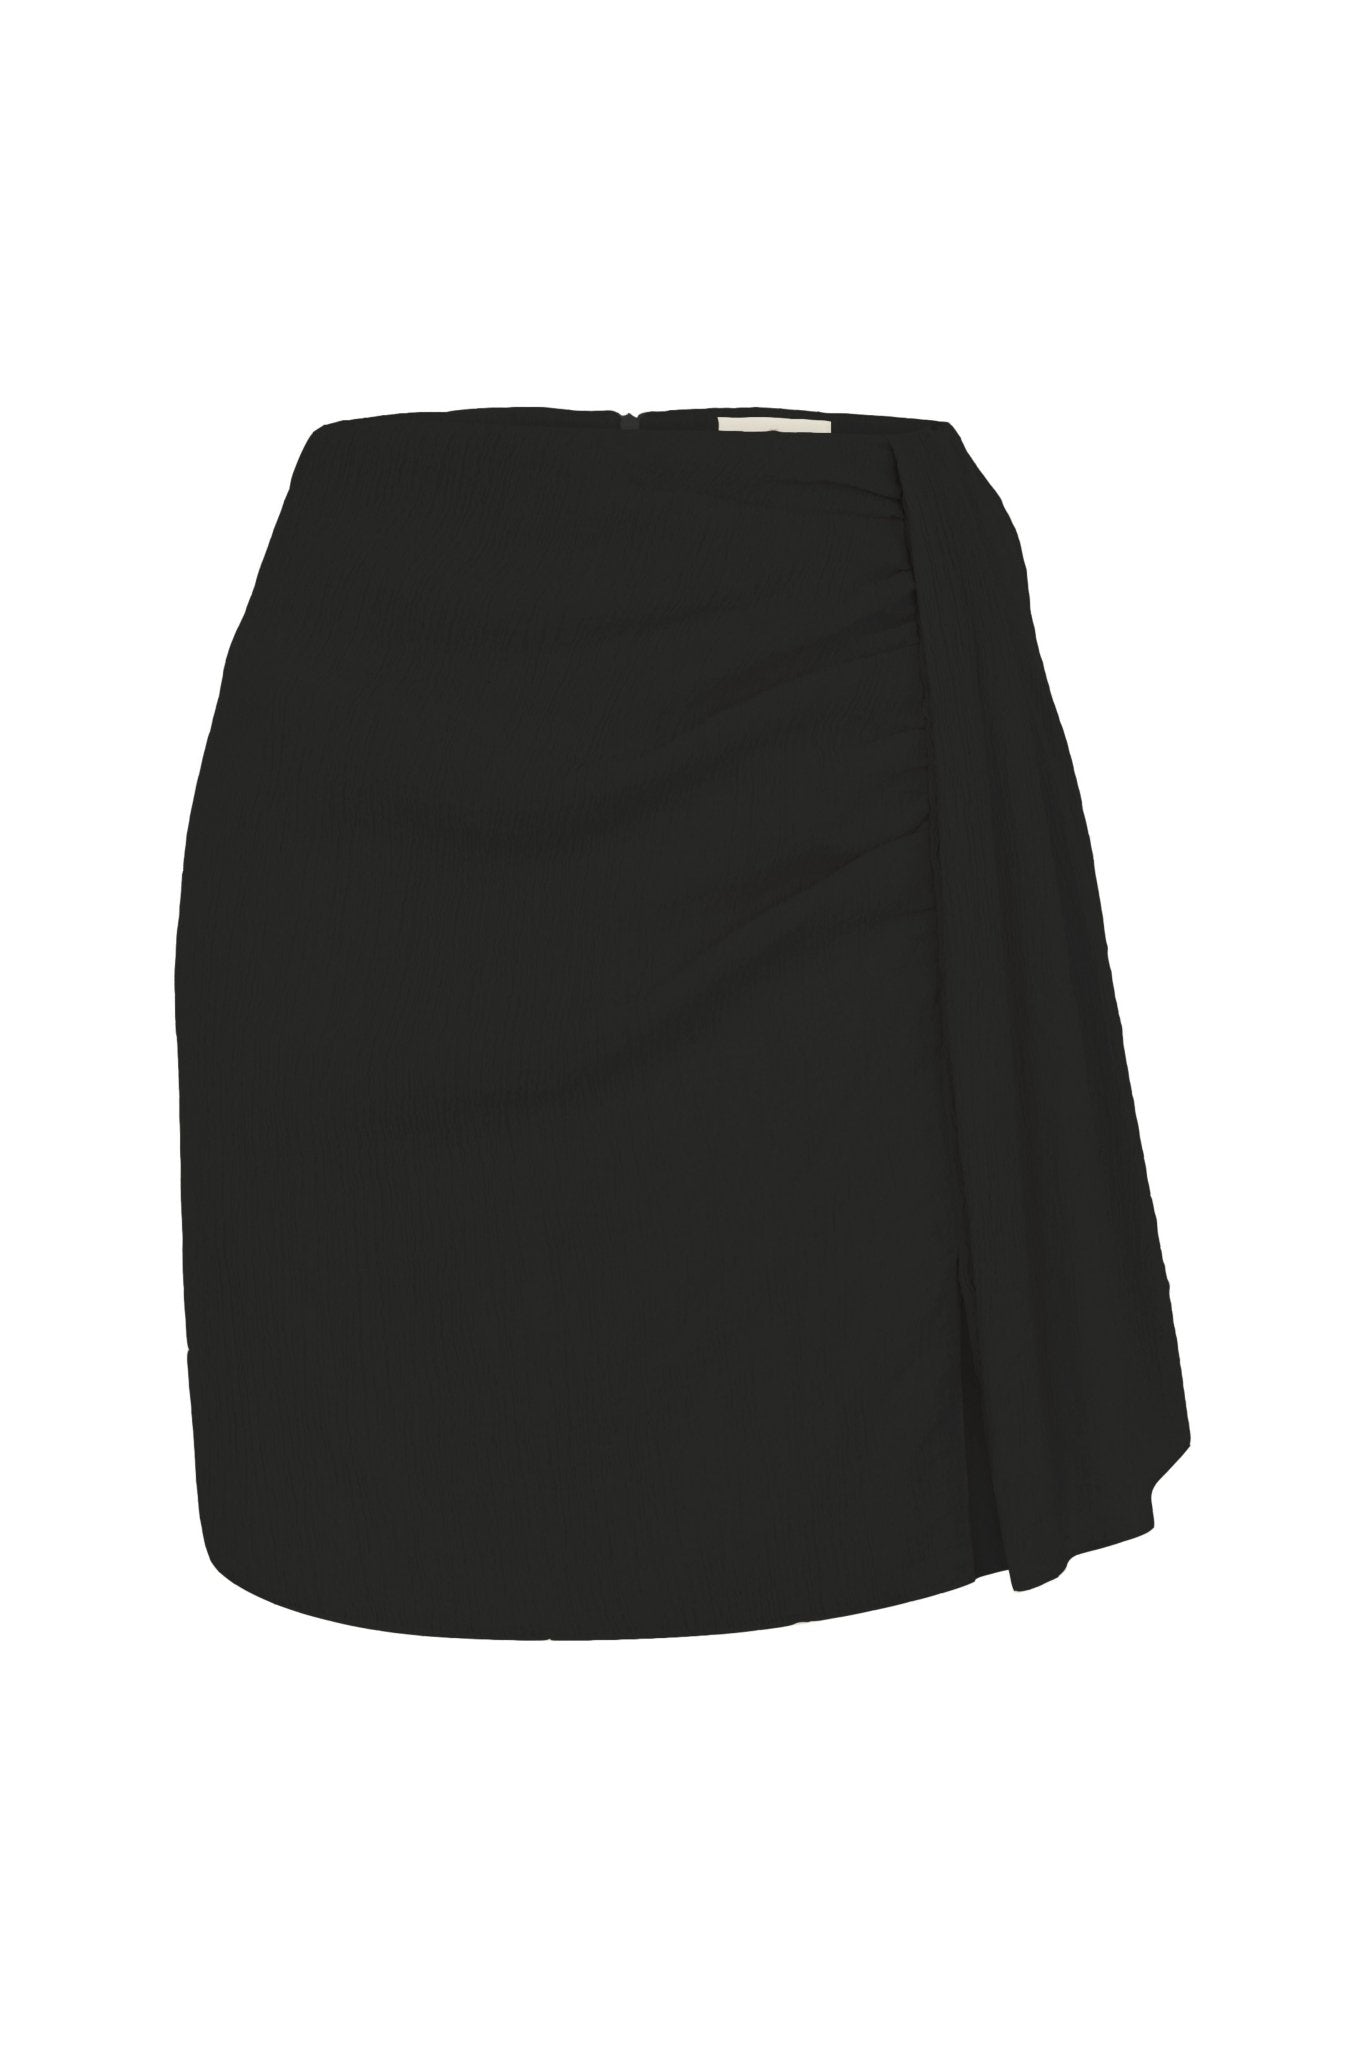 Bella Mini Skirt - Black by The Handloom